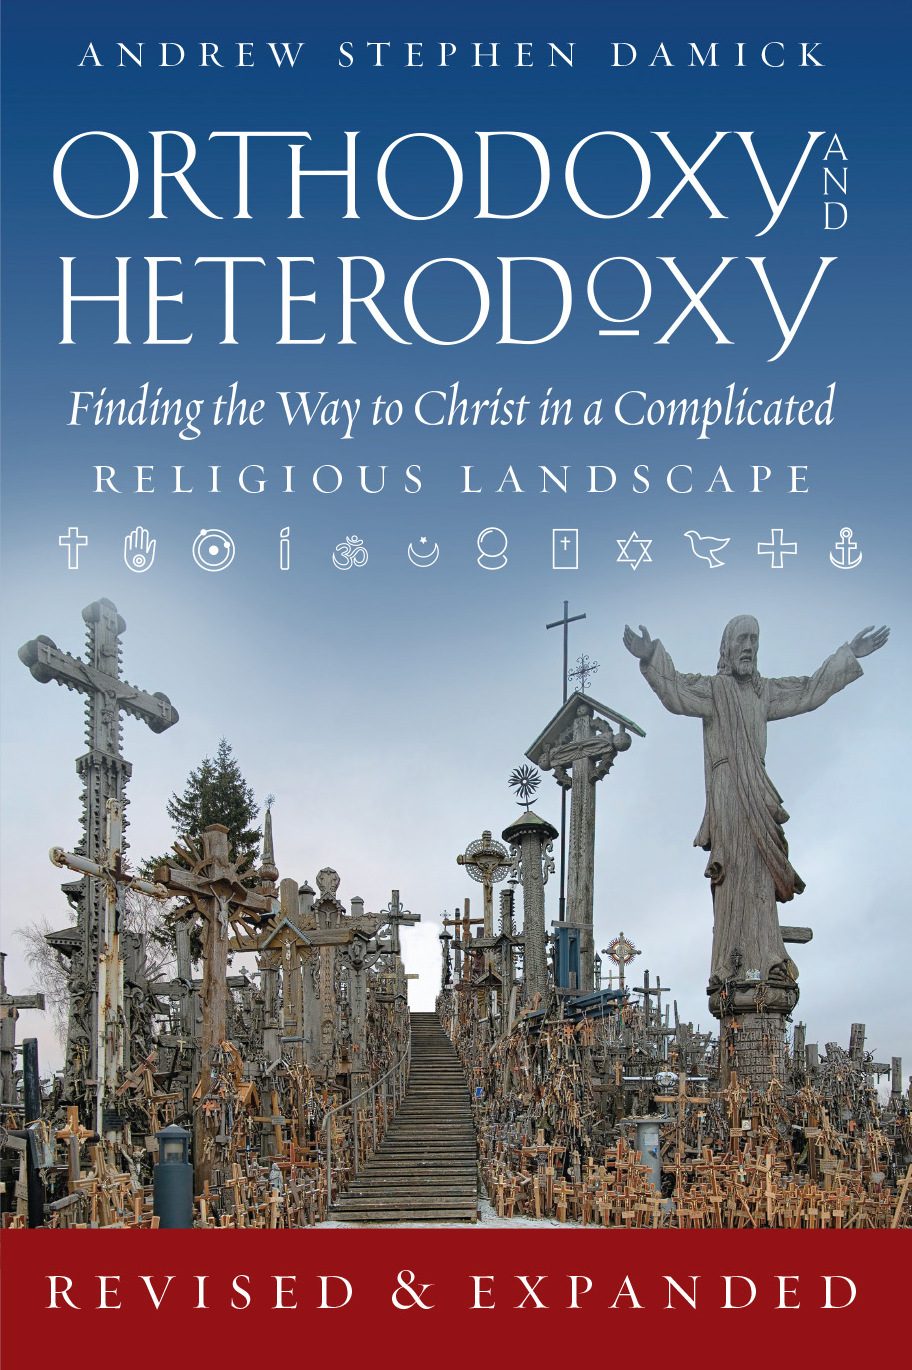 Orthodoxy & Heterodoxy